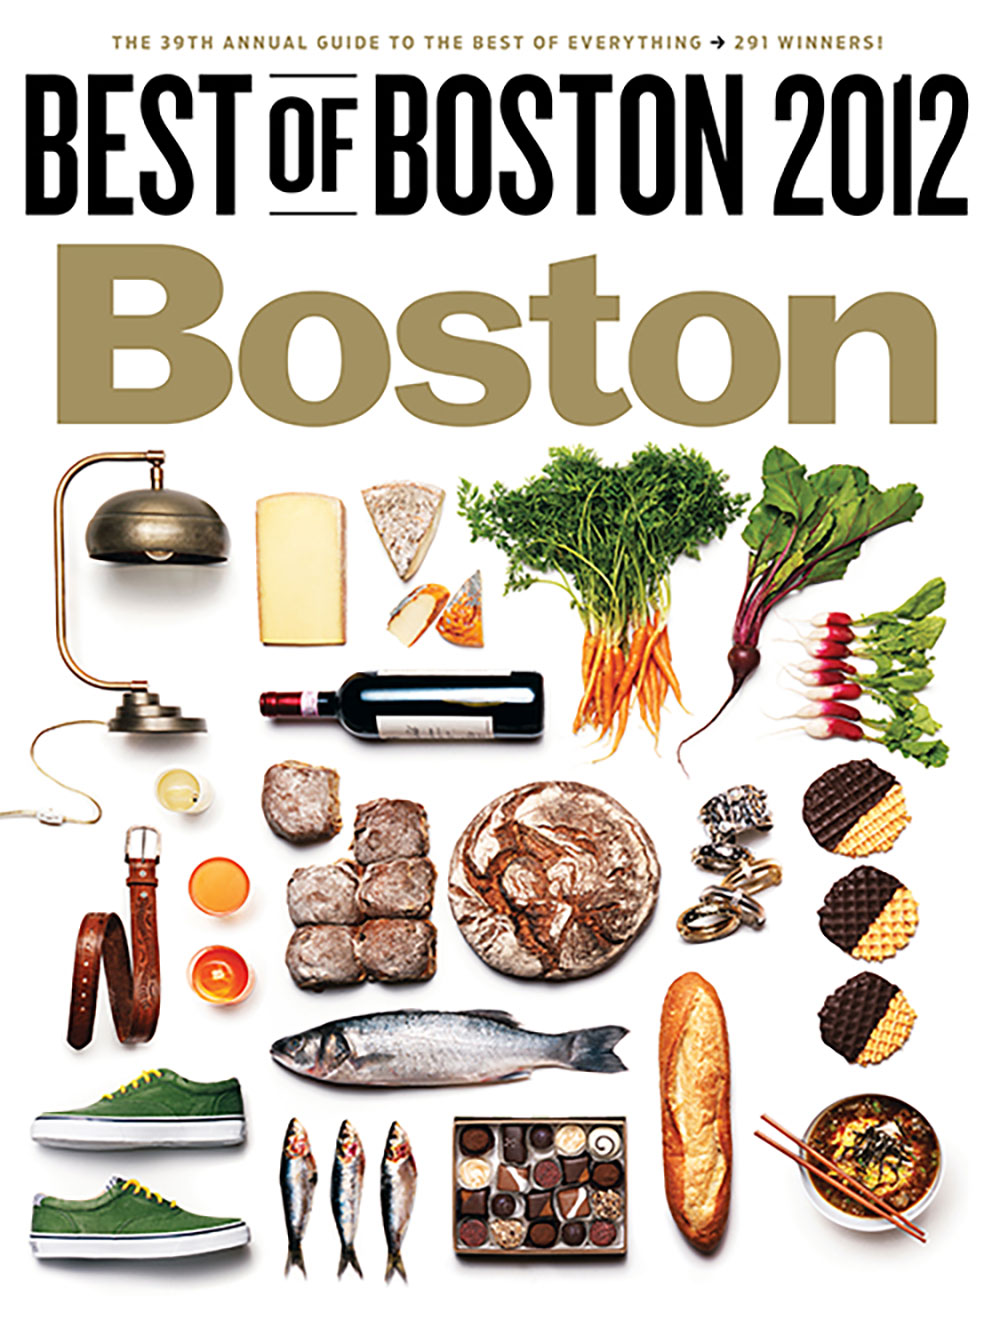 Best of Boston 2012